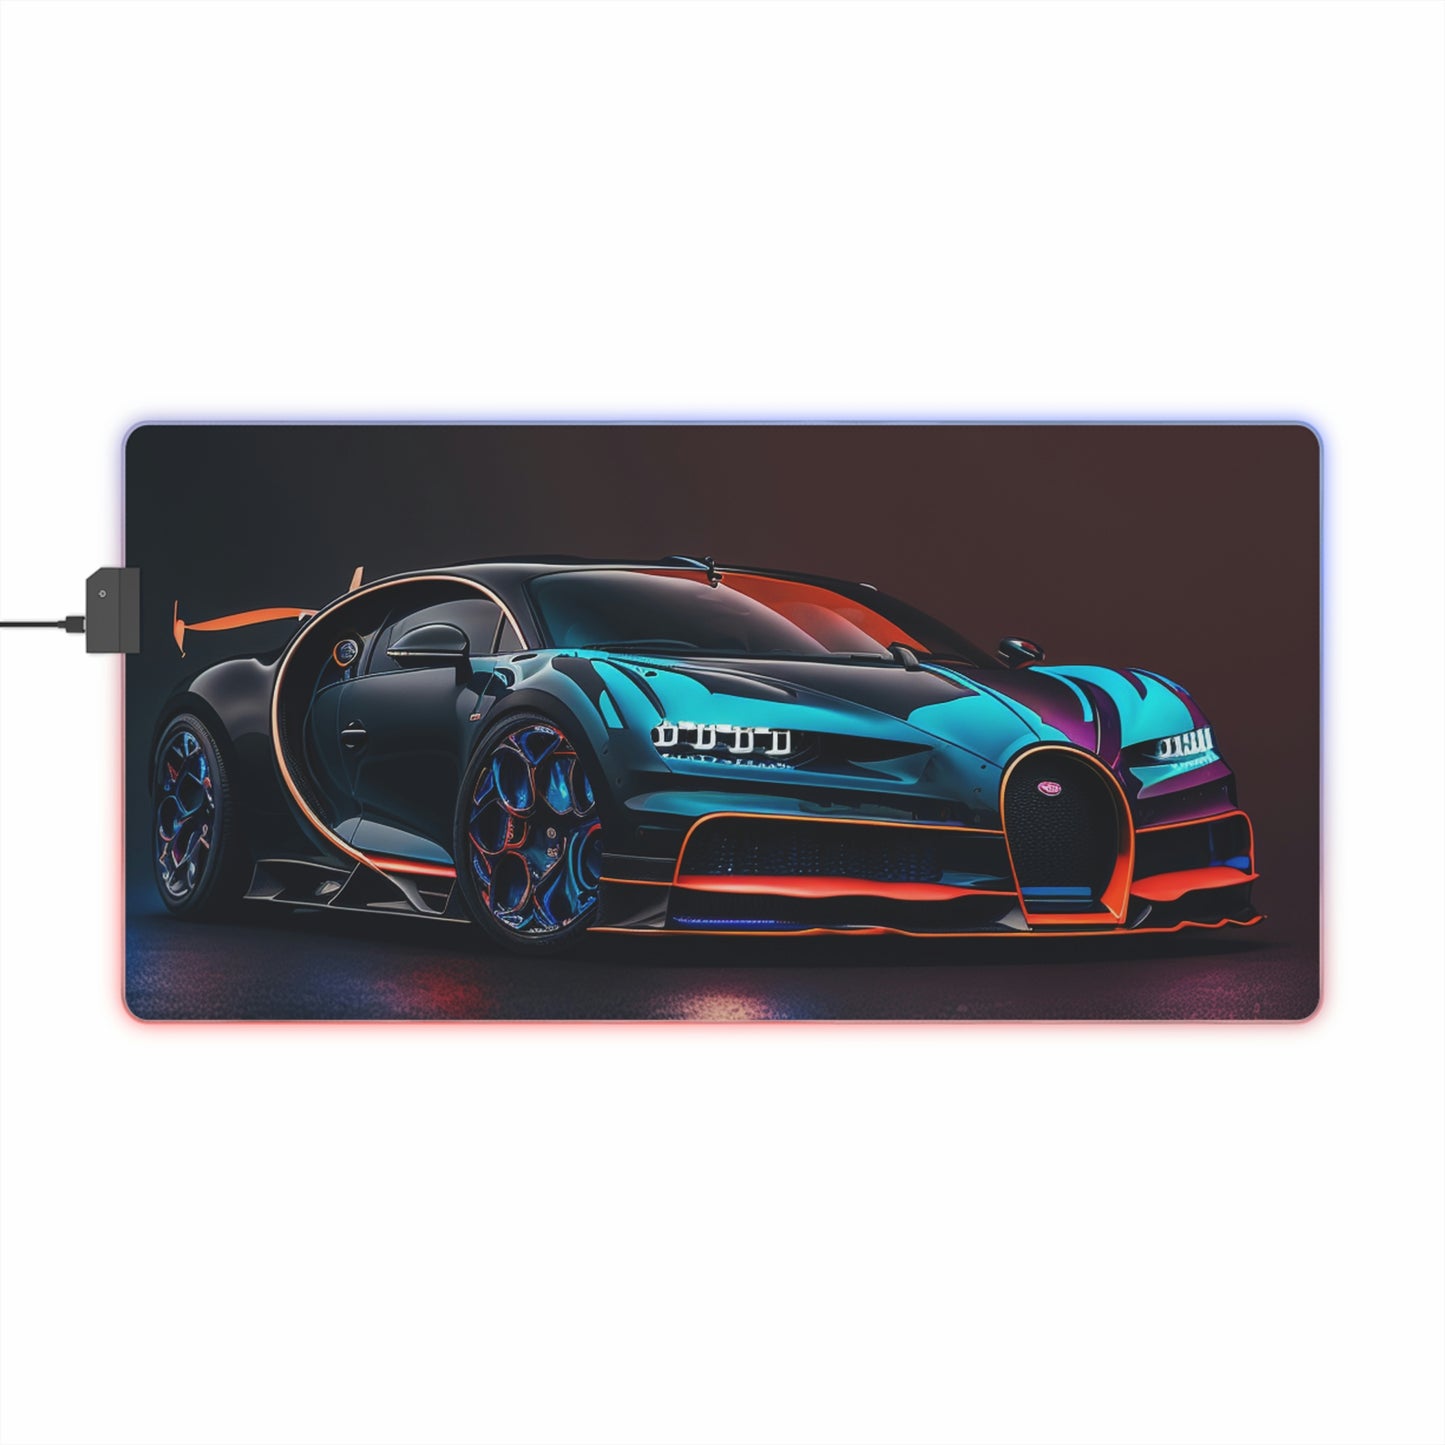 LED Gaming Mouse Pad Bugatti Chiron super 1